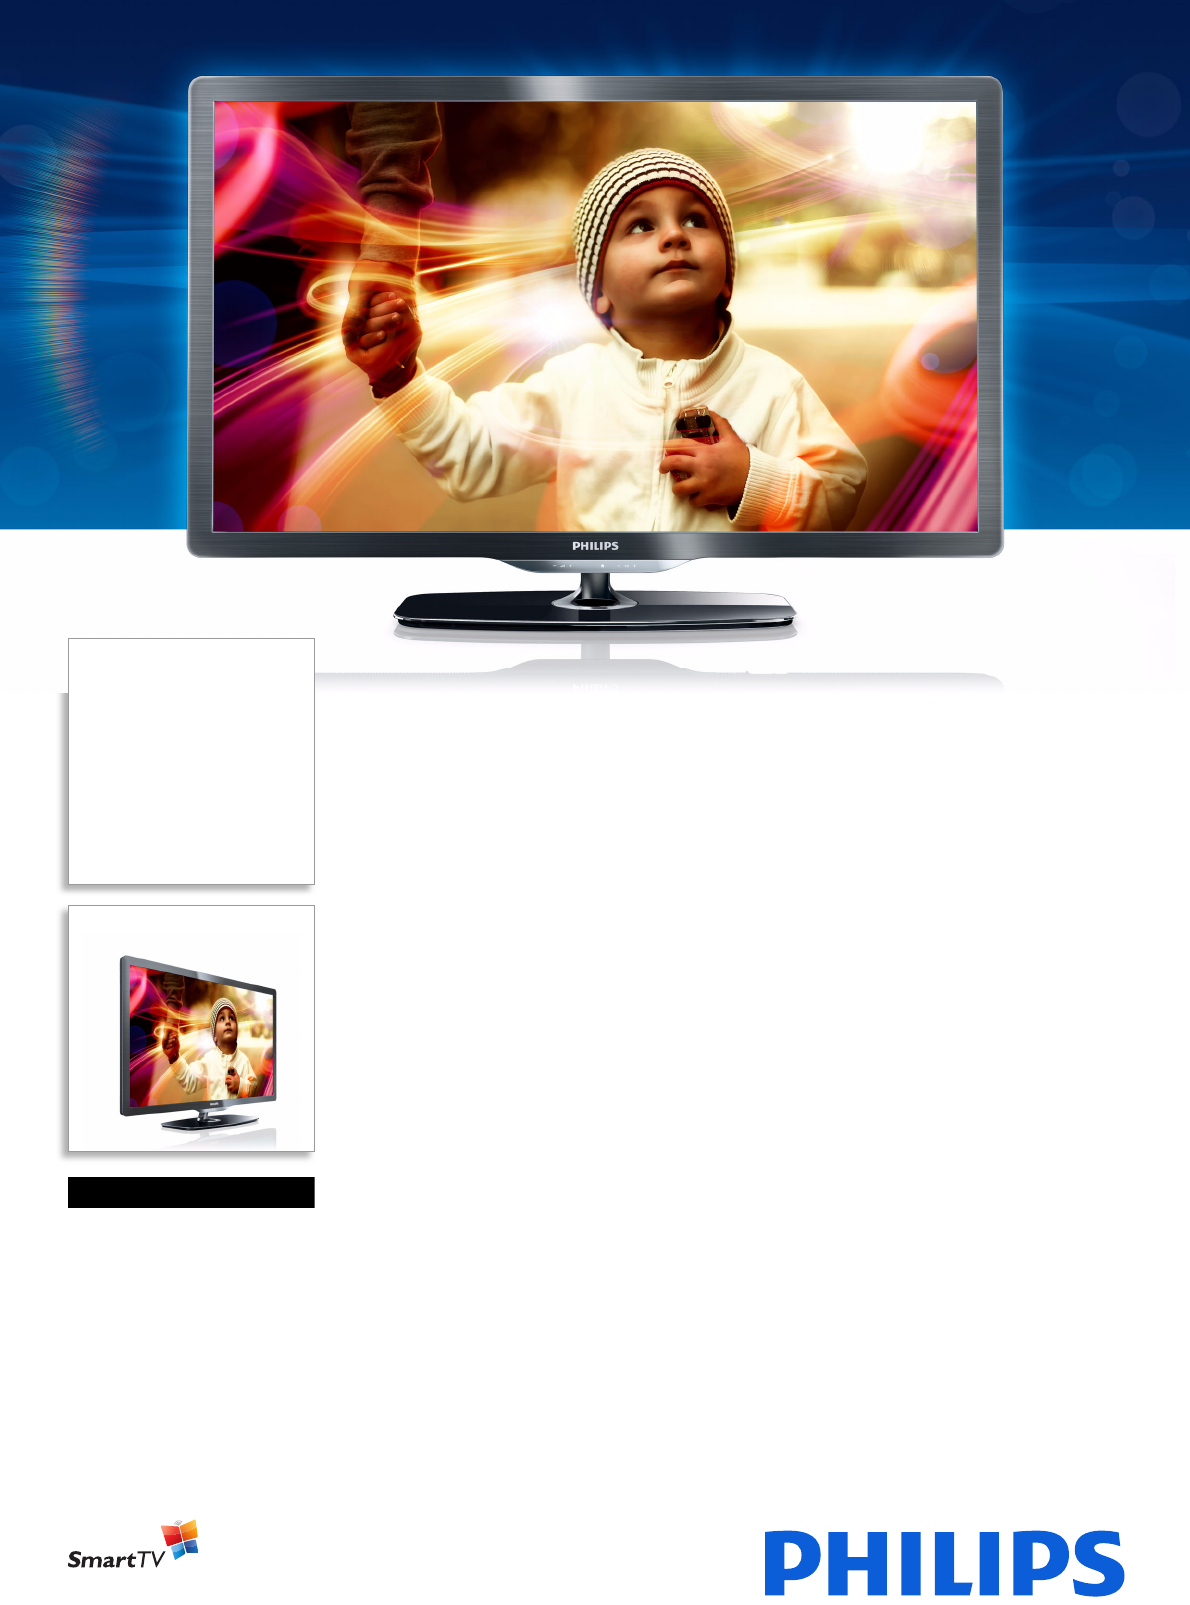 Philips 37pfl6606k 02 Smart Led Tv With Pixel Plus Hd Brochure 37pfl6606k 02 Pss